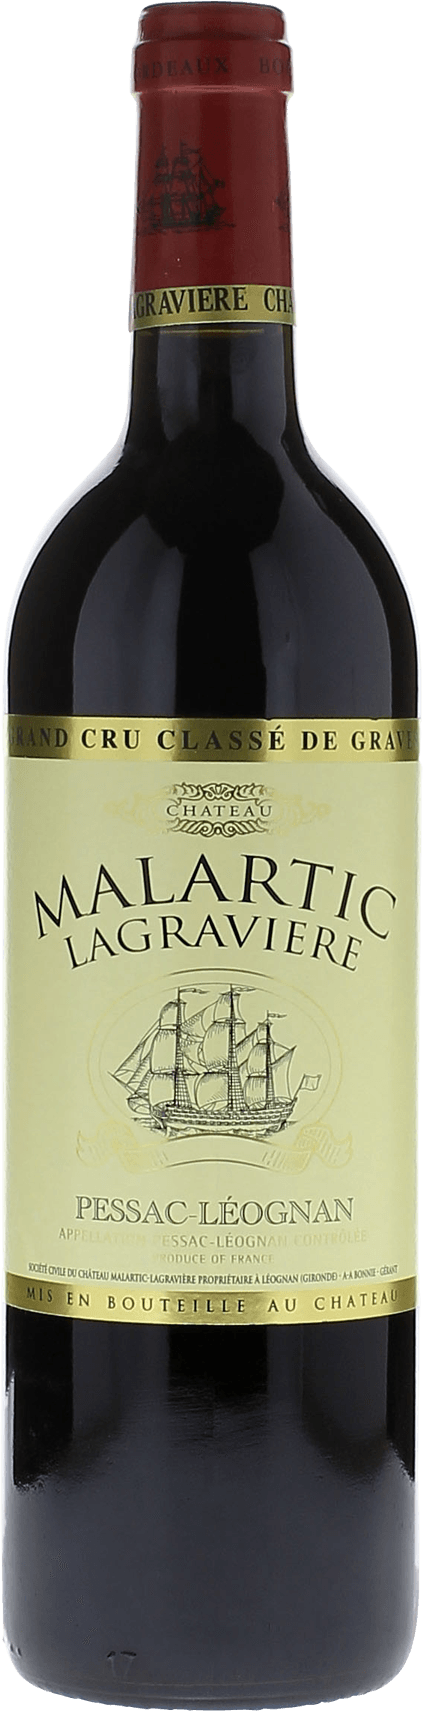 Malartic lagraviere rouge 1995 Grand Cru Class Graves, Bordeaux rouge